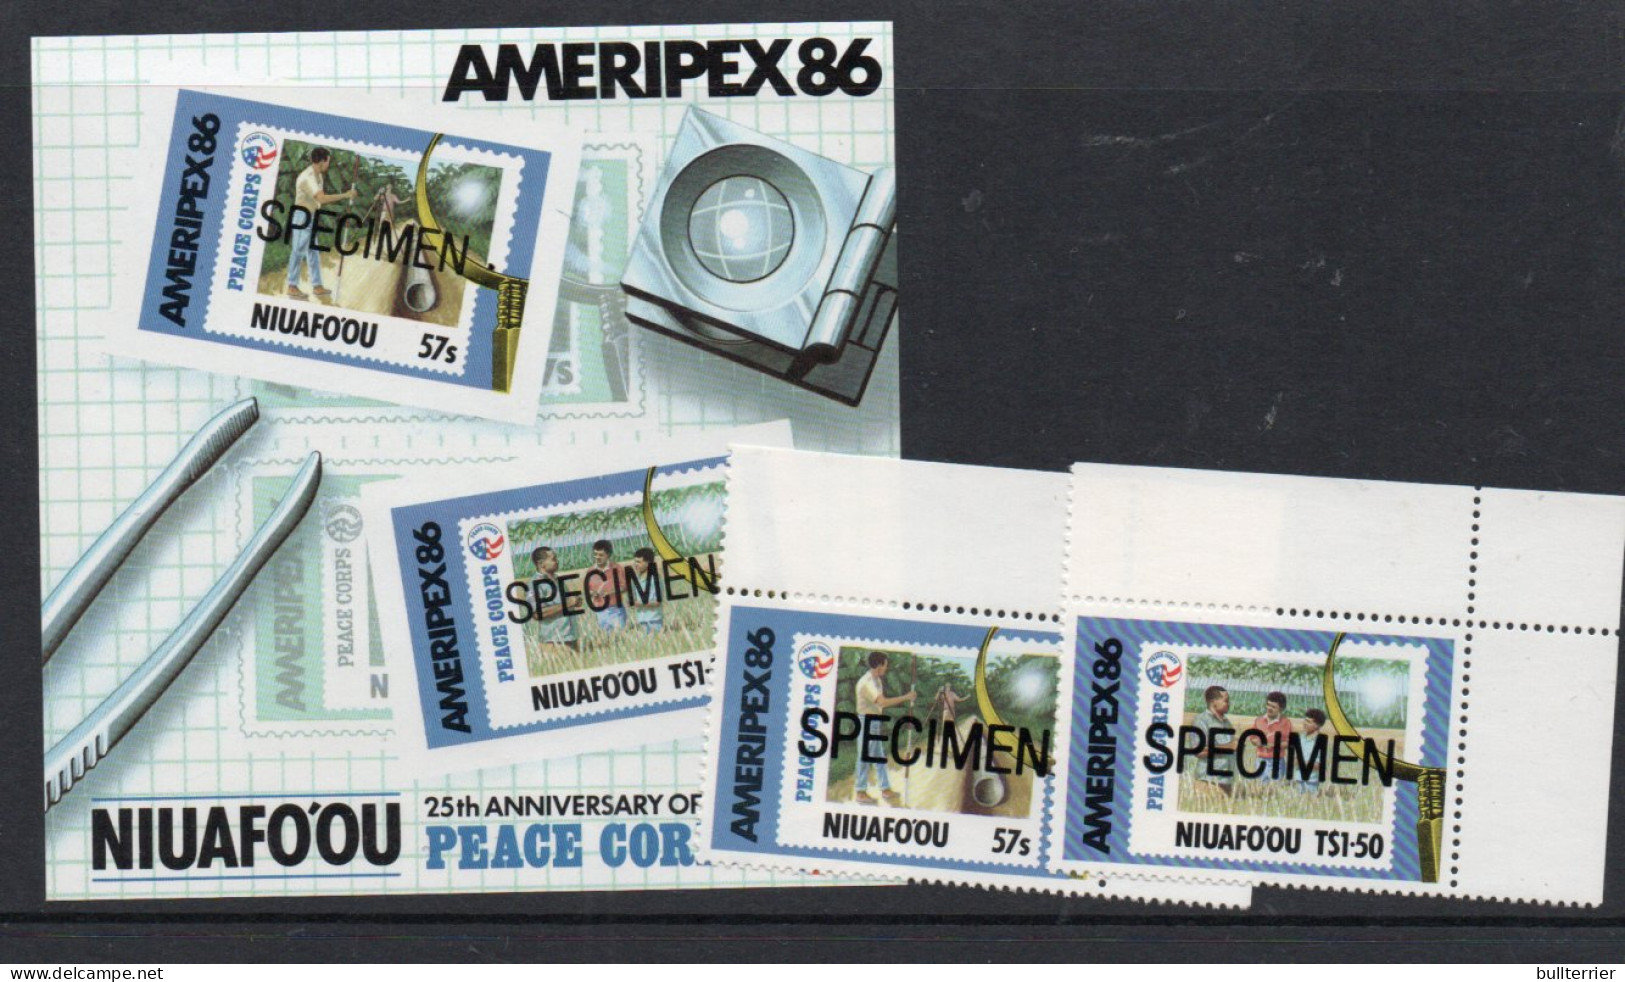 NIUAFOOU - 1986- AMERIPEX SET OF 2 + S/SHEET  " SPECIMENS"  MINT NEVER HINGED  - Otros - Oceanía